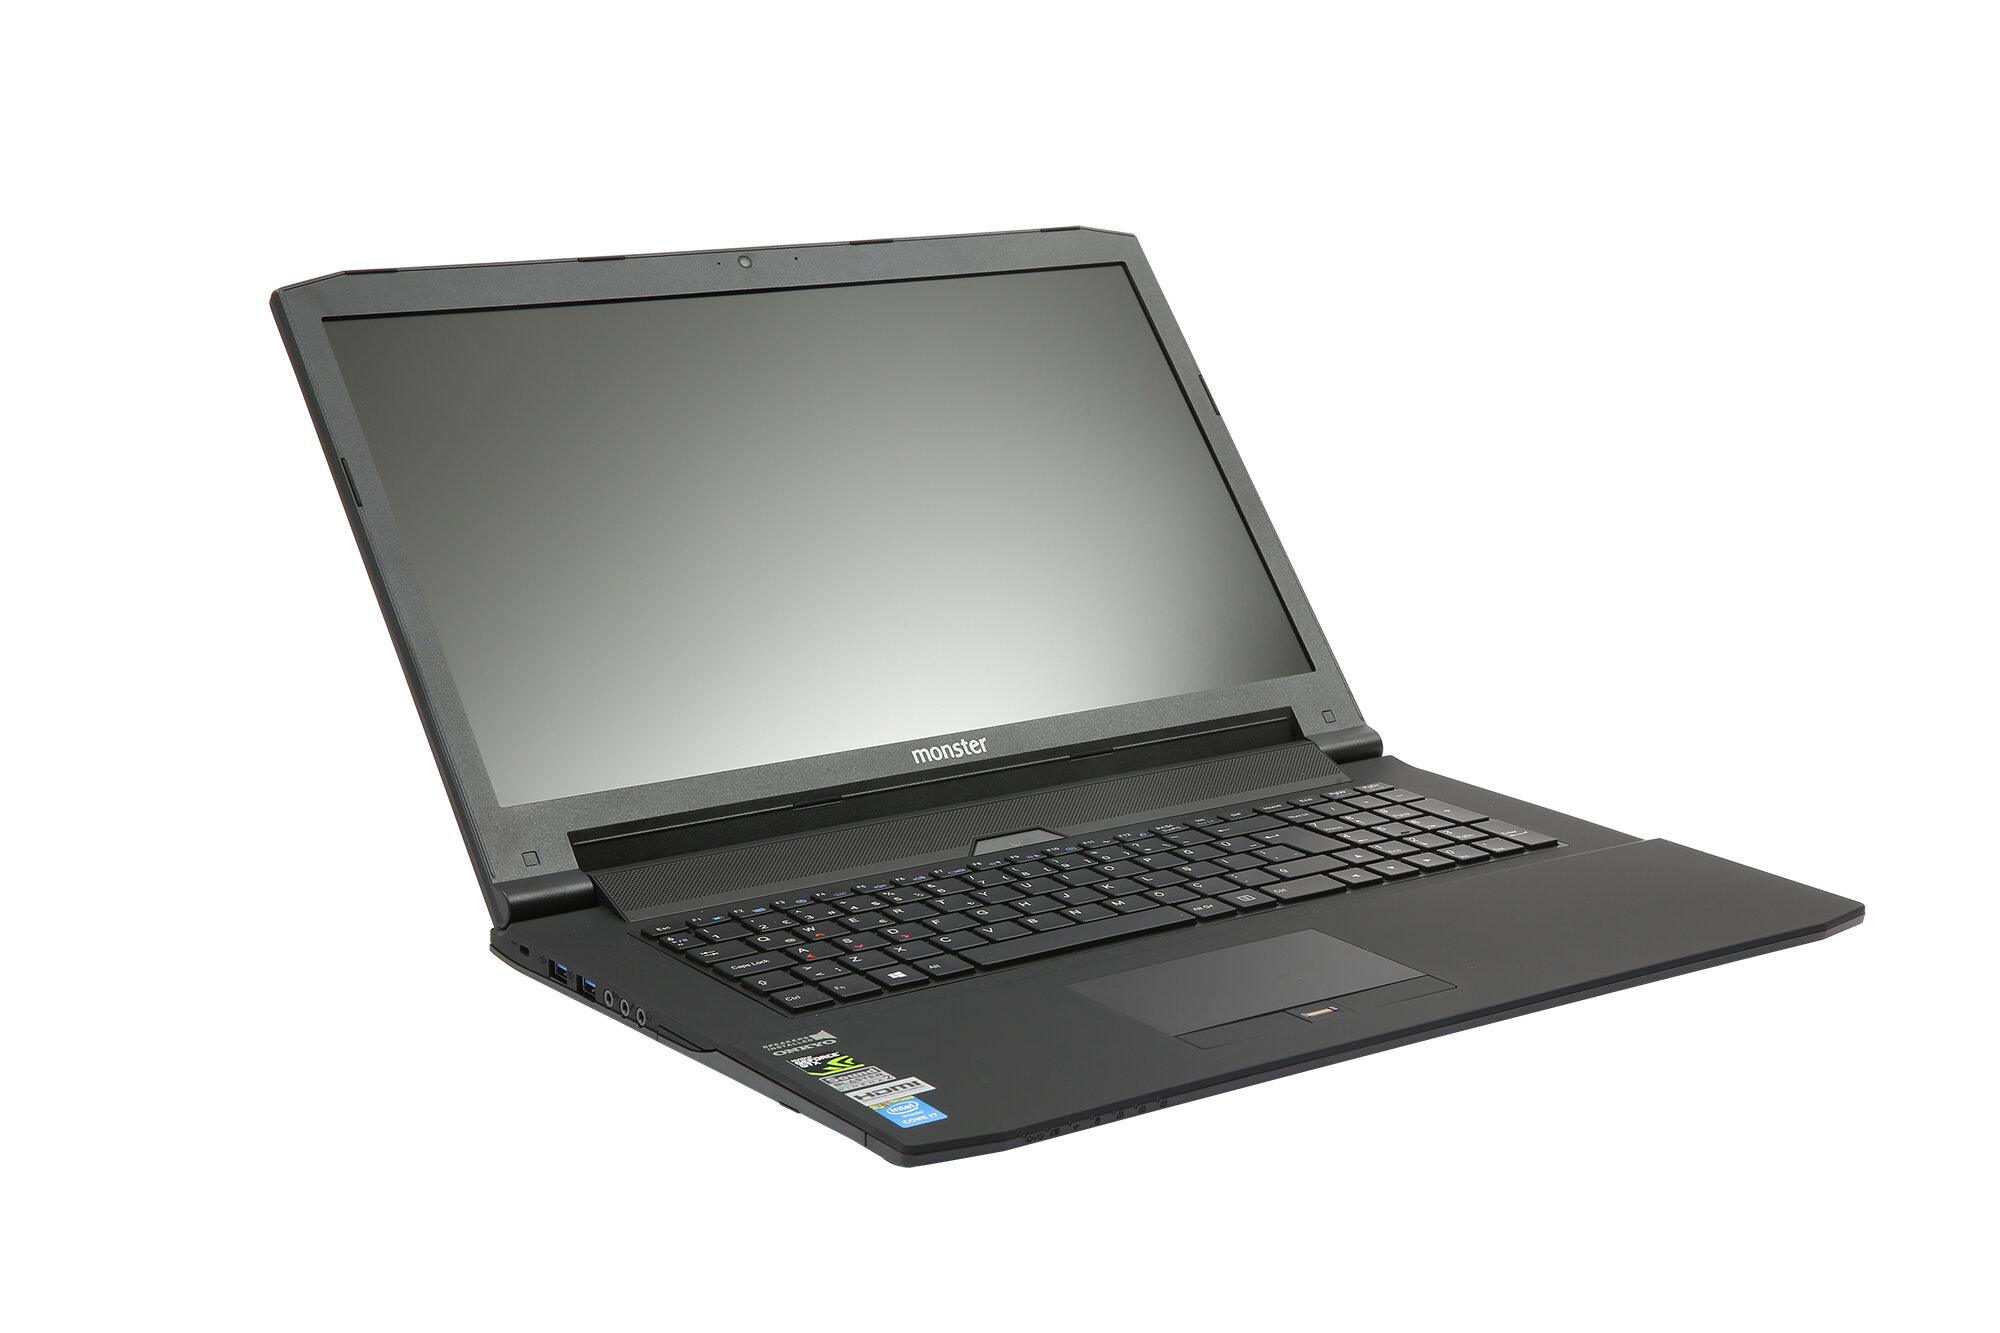 Abra A7 V6.2.1 17.3" Gaming Laptop 13368